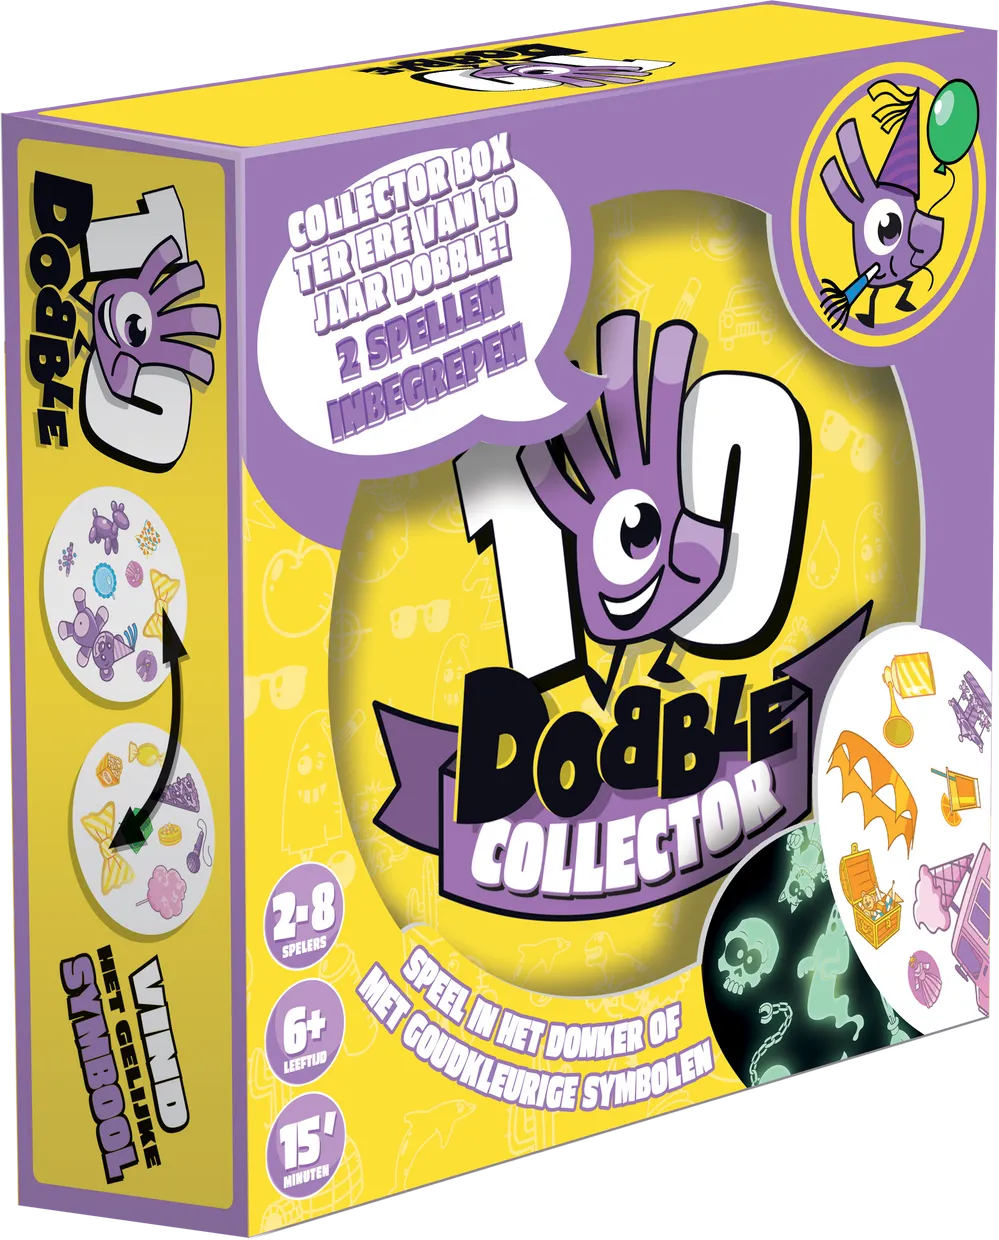 Dobble Collector NL